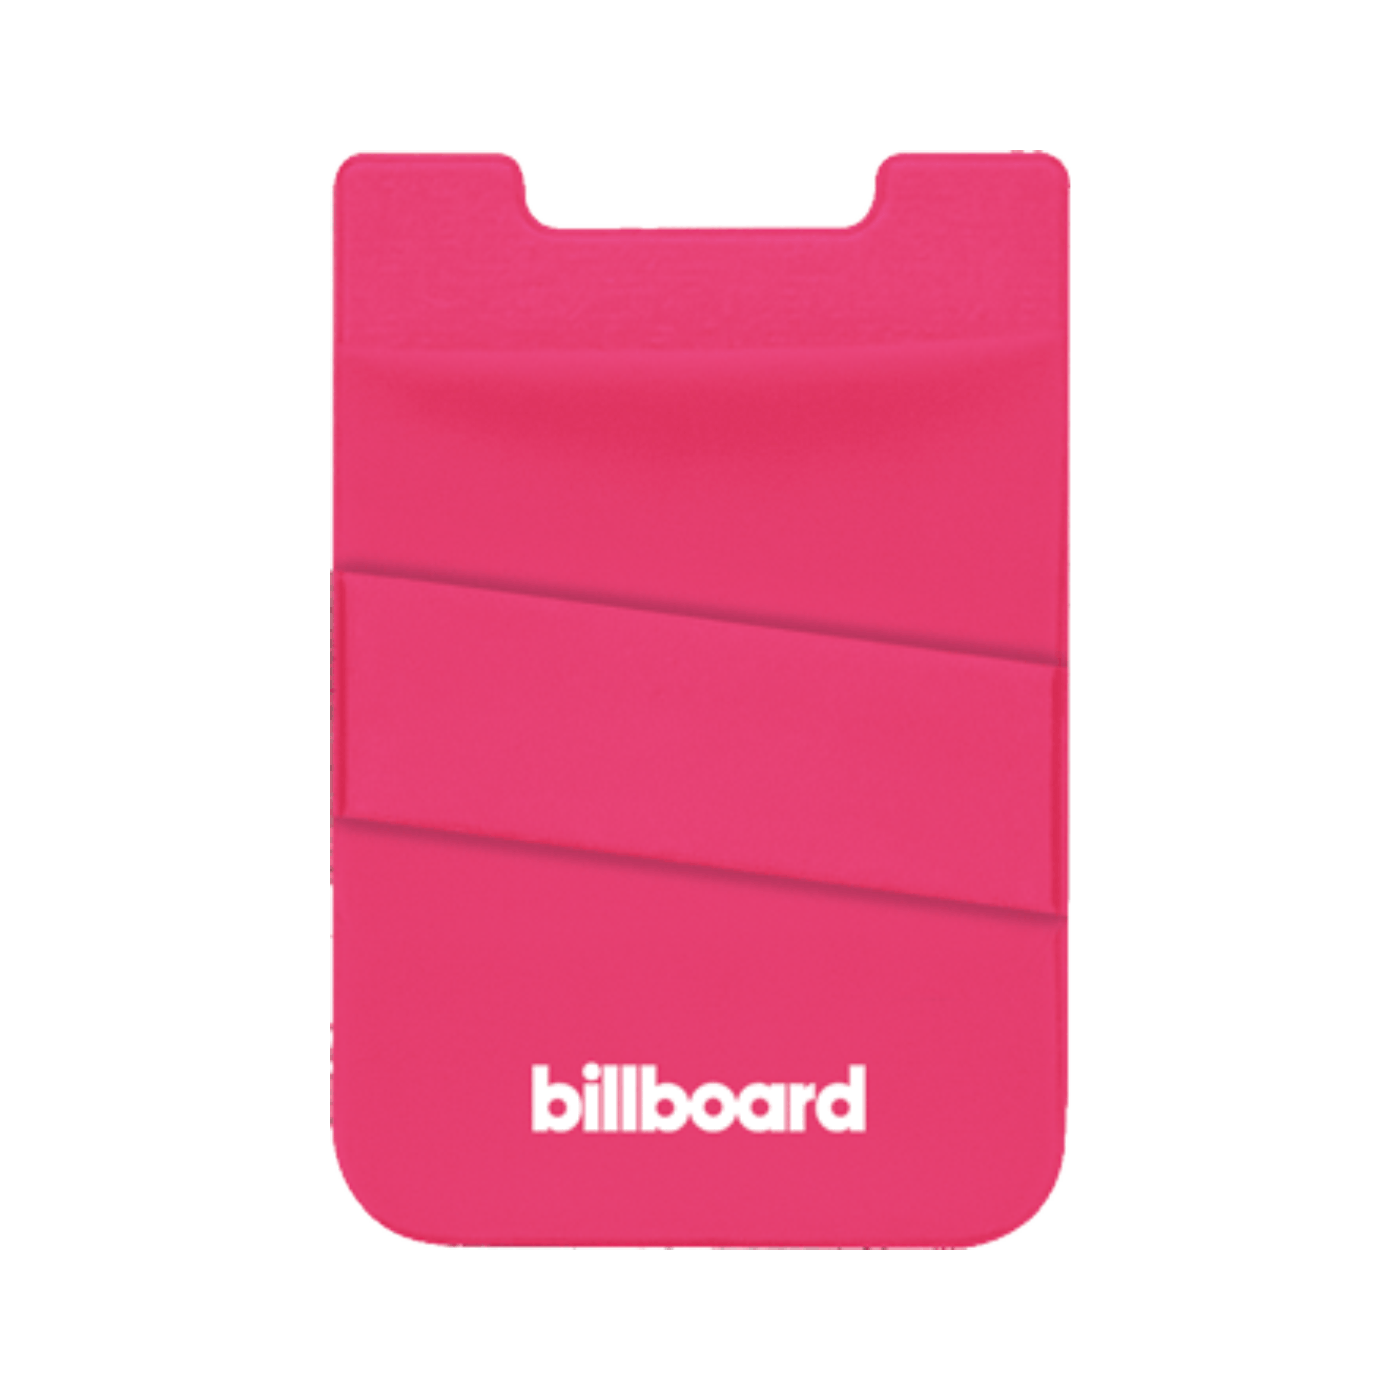 Wallet/ Card Holder Adhesive For Smartphones Pink Color